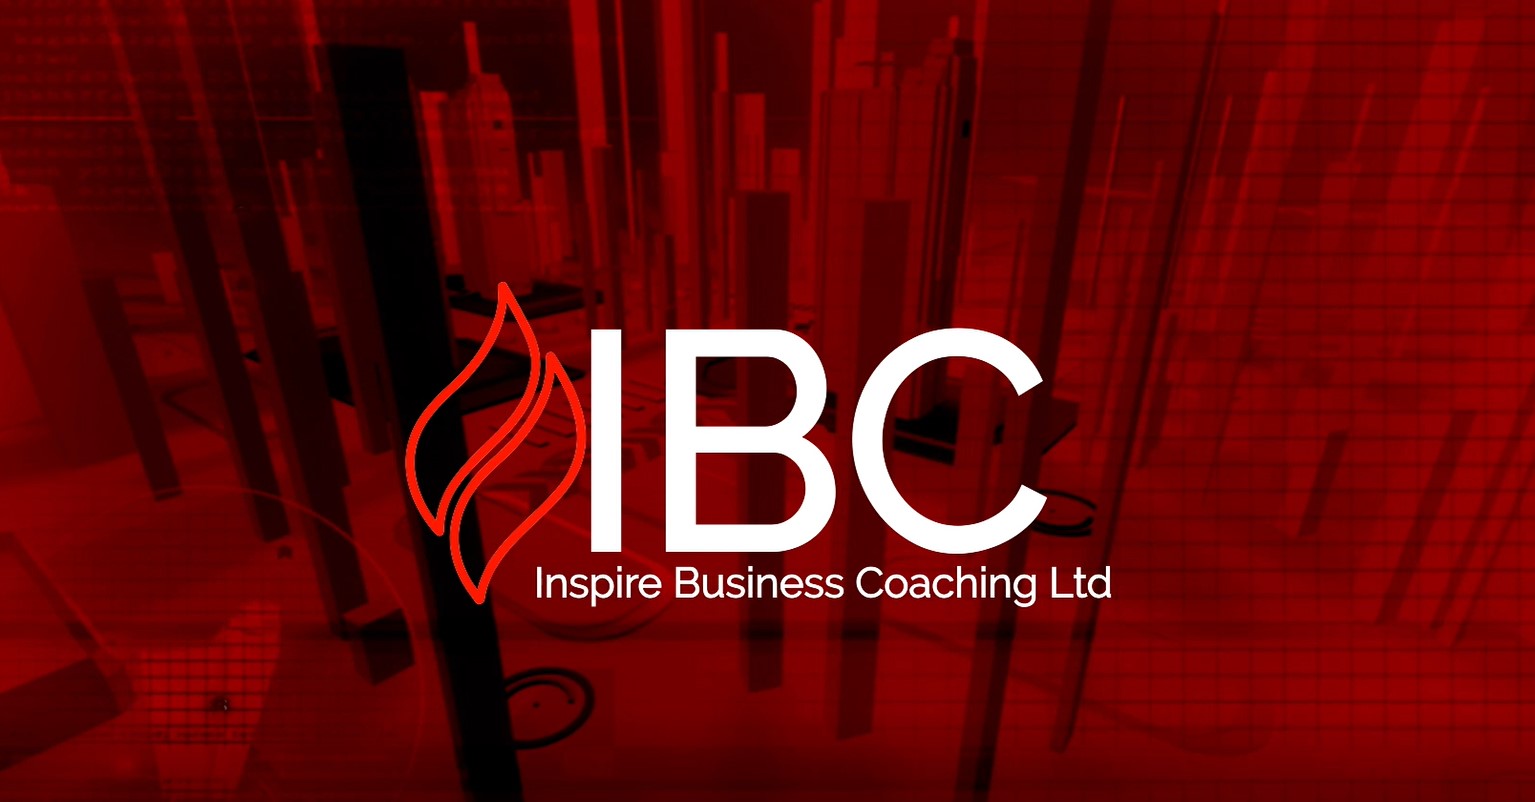 Inspire Business Coaching Ltd